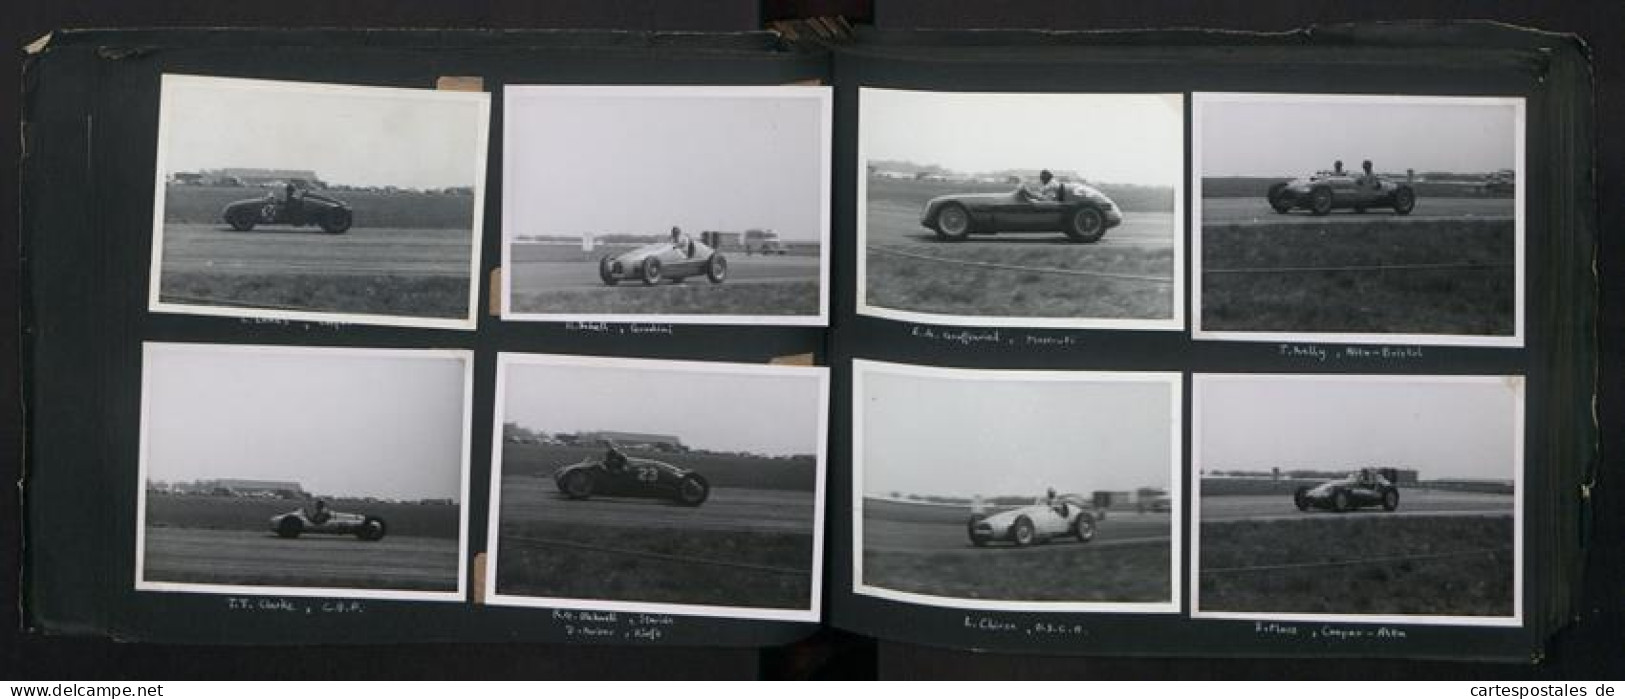 Fotoalbum mit 232 Fotografien Road Raceing 1952-1957, Goodwood, Silverstone, Autorennen, Motorrad, Ferrari, Mercedes 